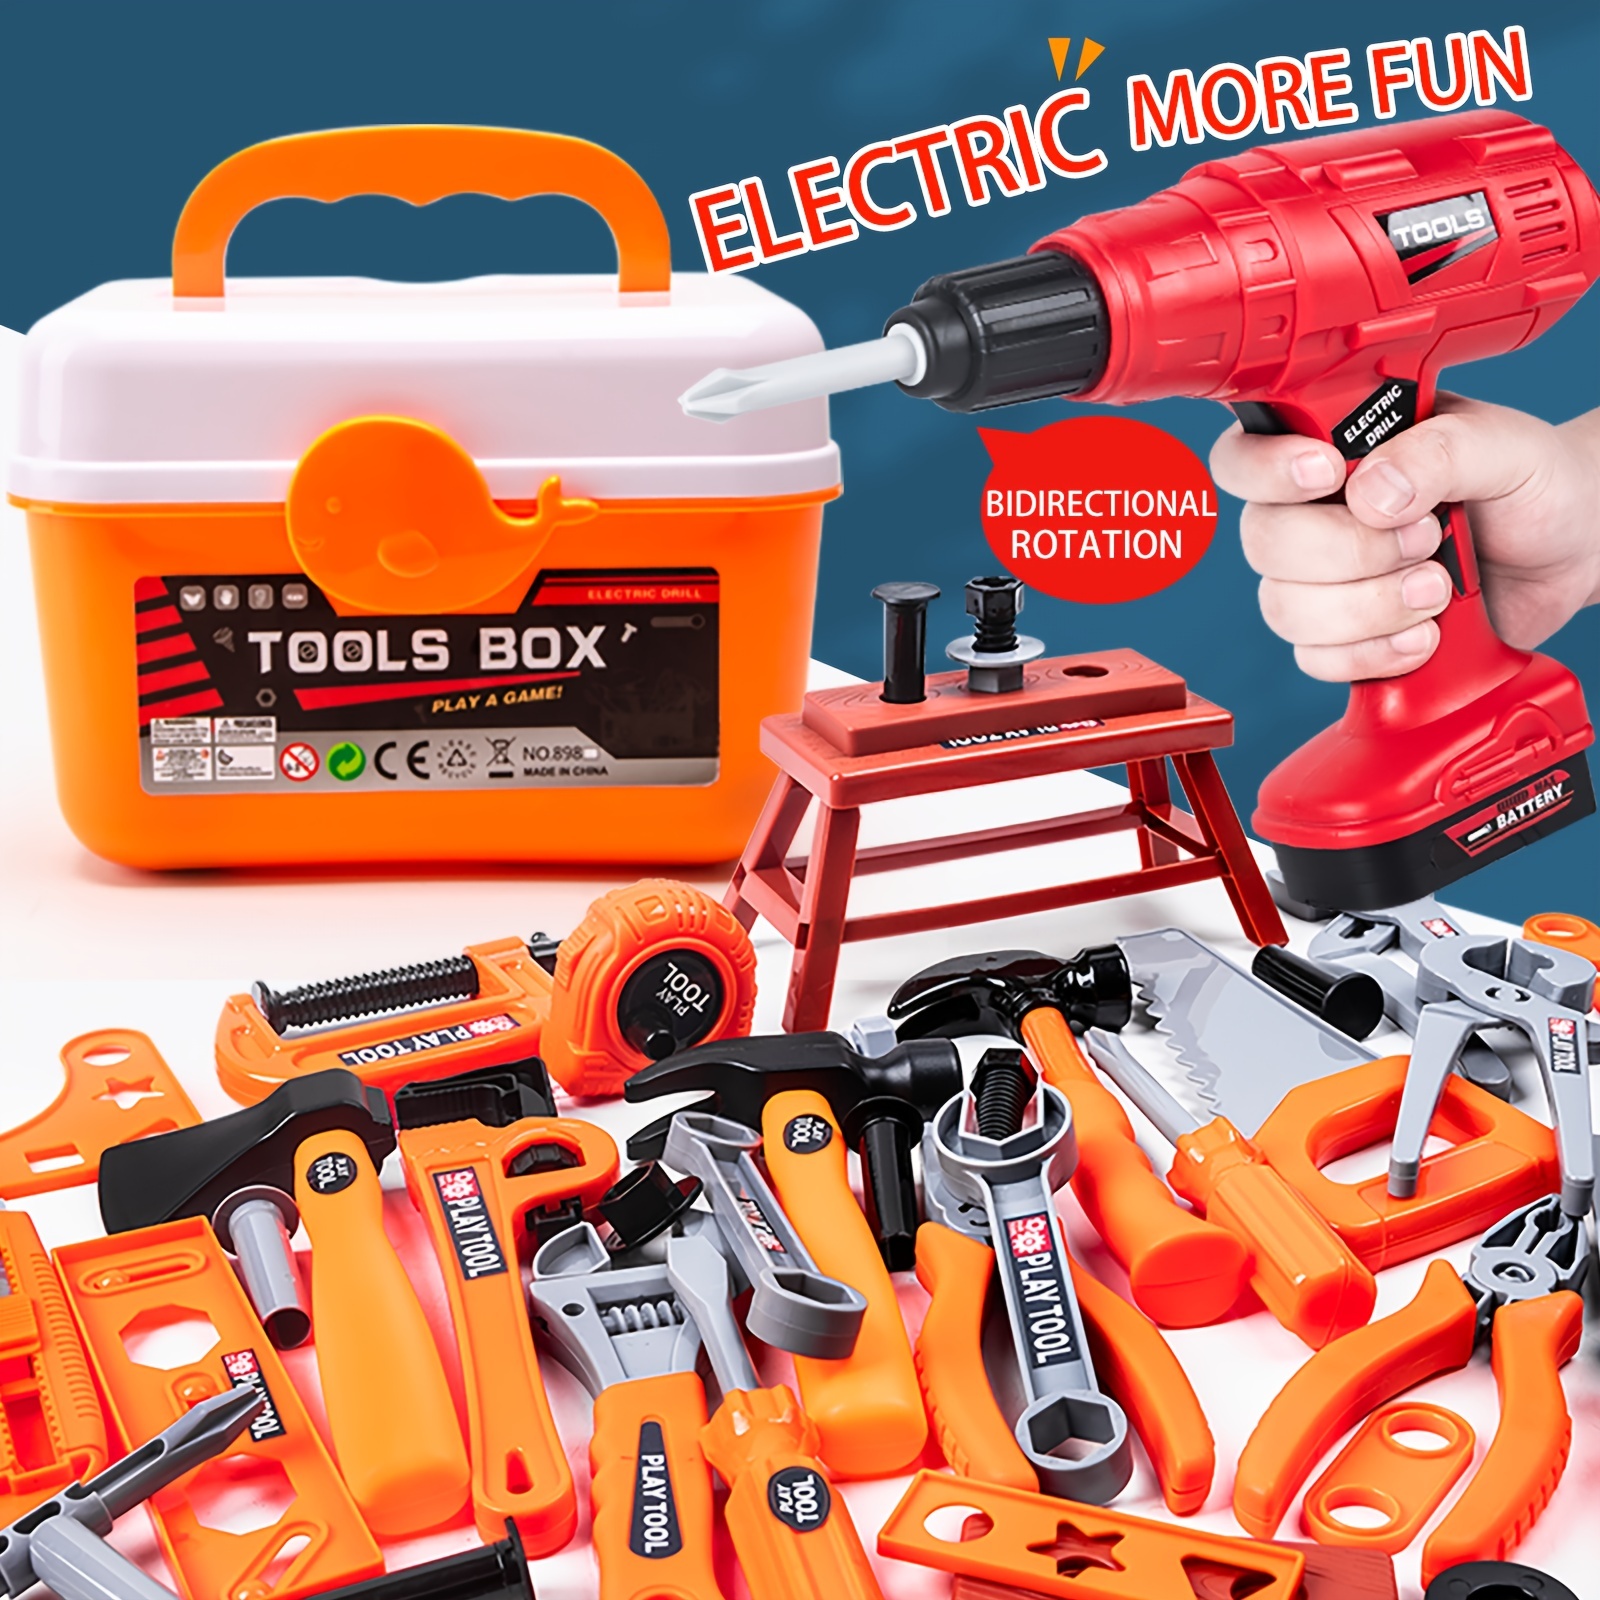 kids tool box set, kids plastic tool box